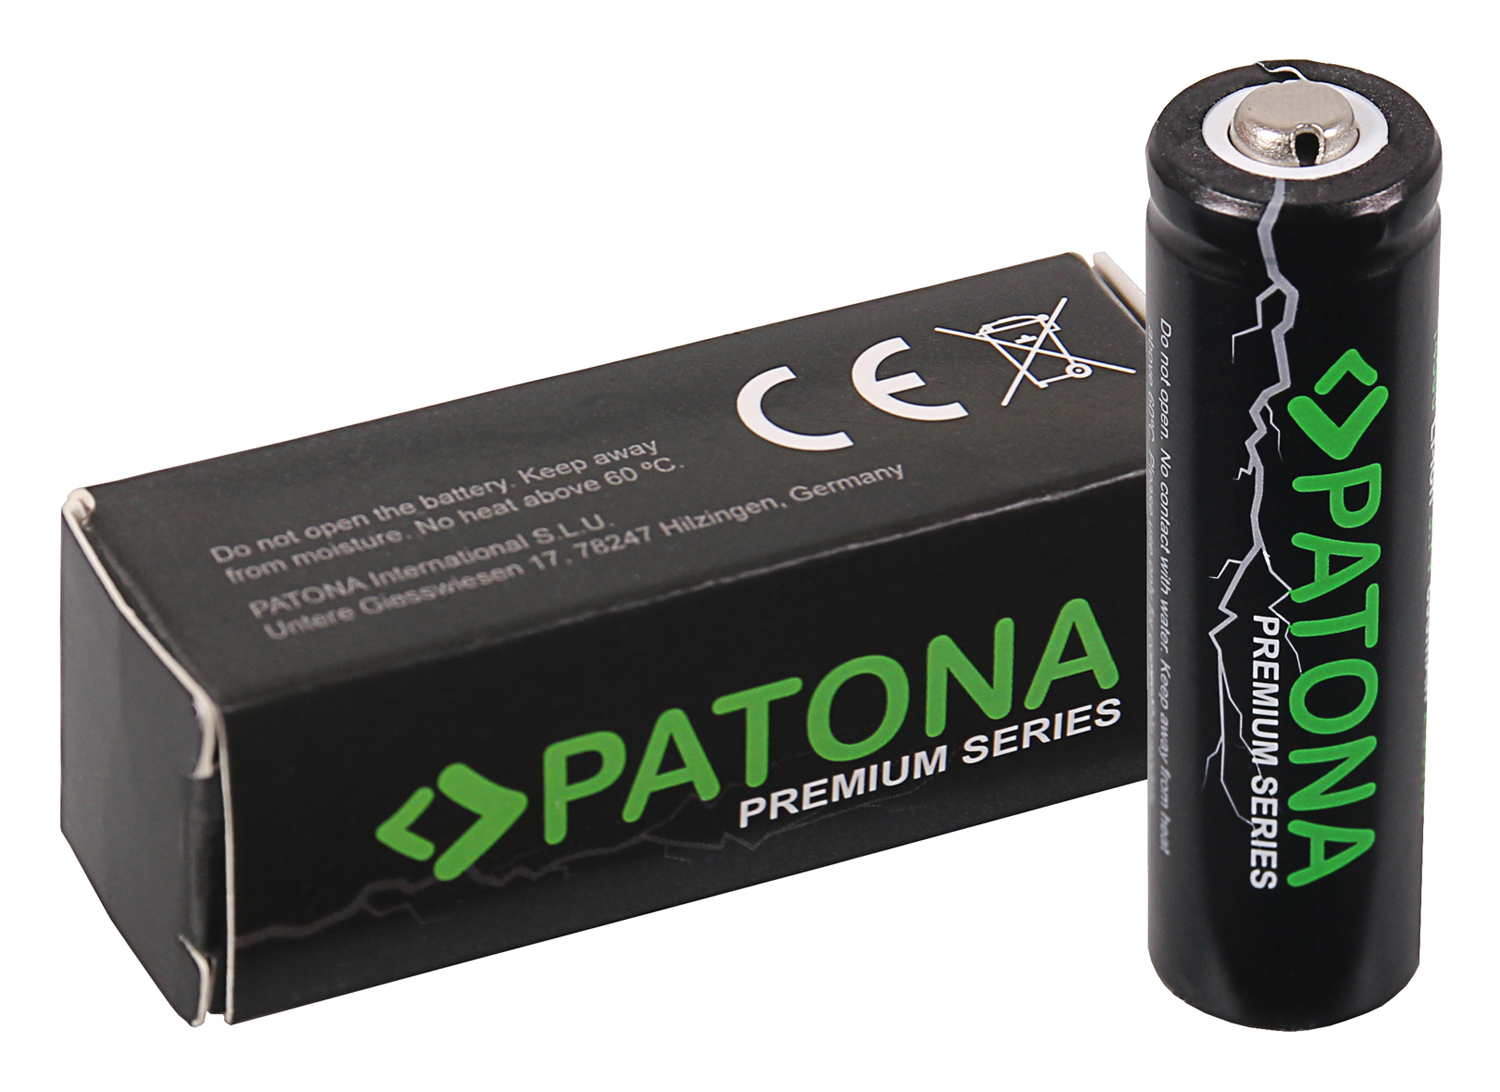 Batteria PATONA Premium 18650 Cell 18650 Li-ion Battery unprotected sharp/button top 3,7V 3350mAh LG Cell